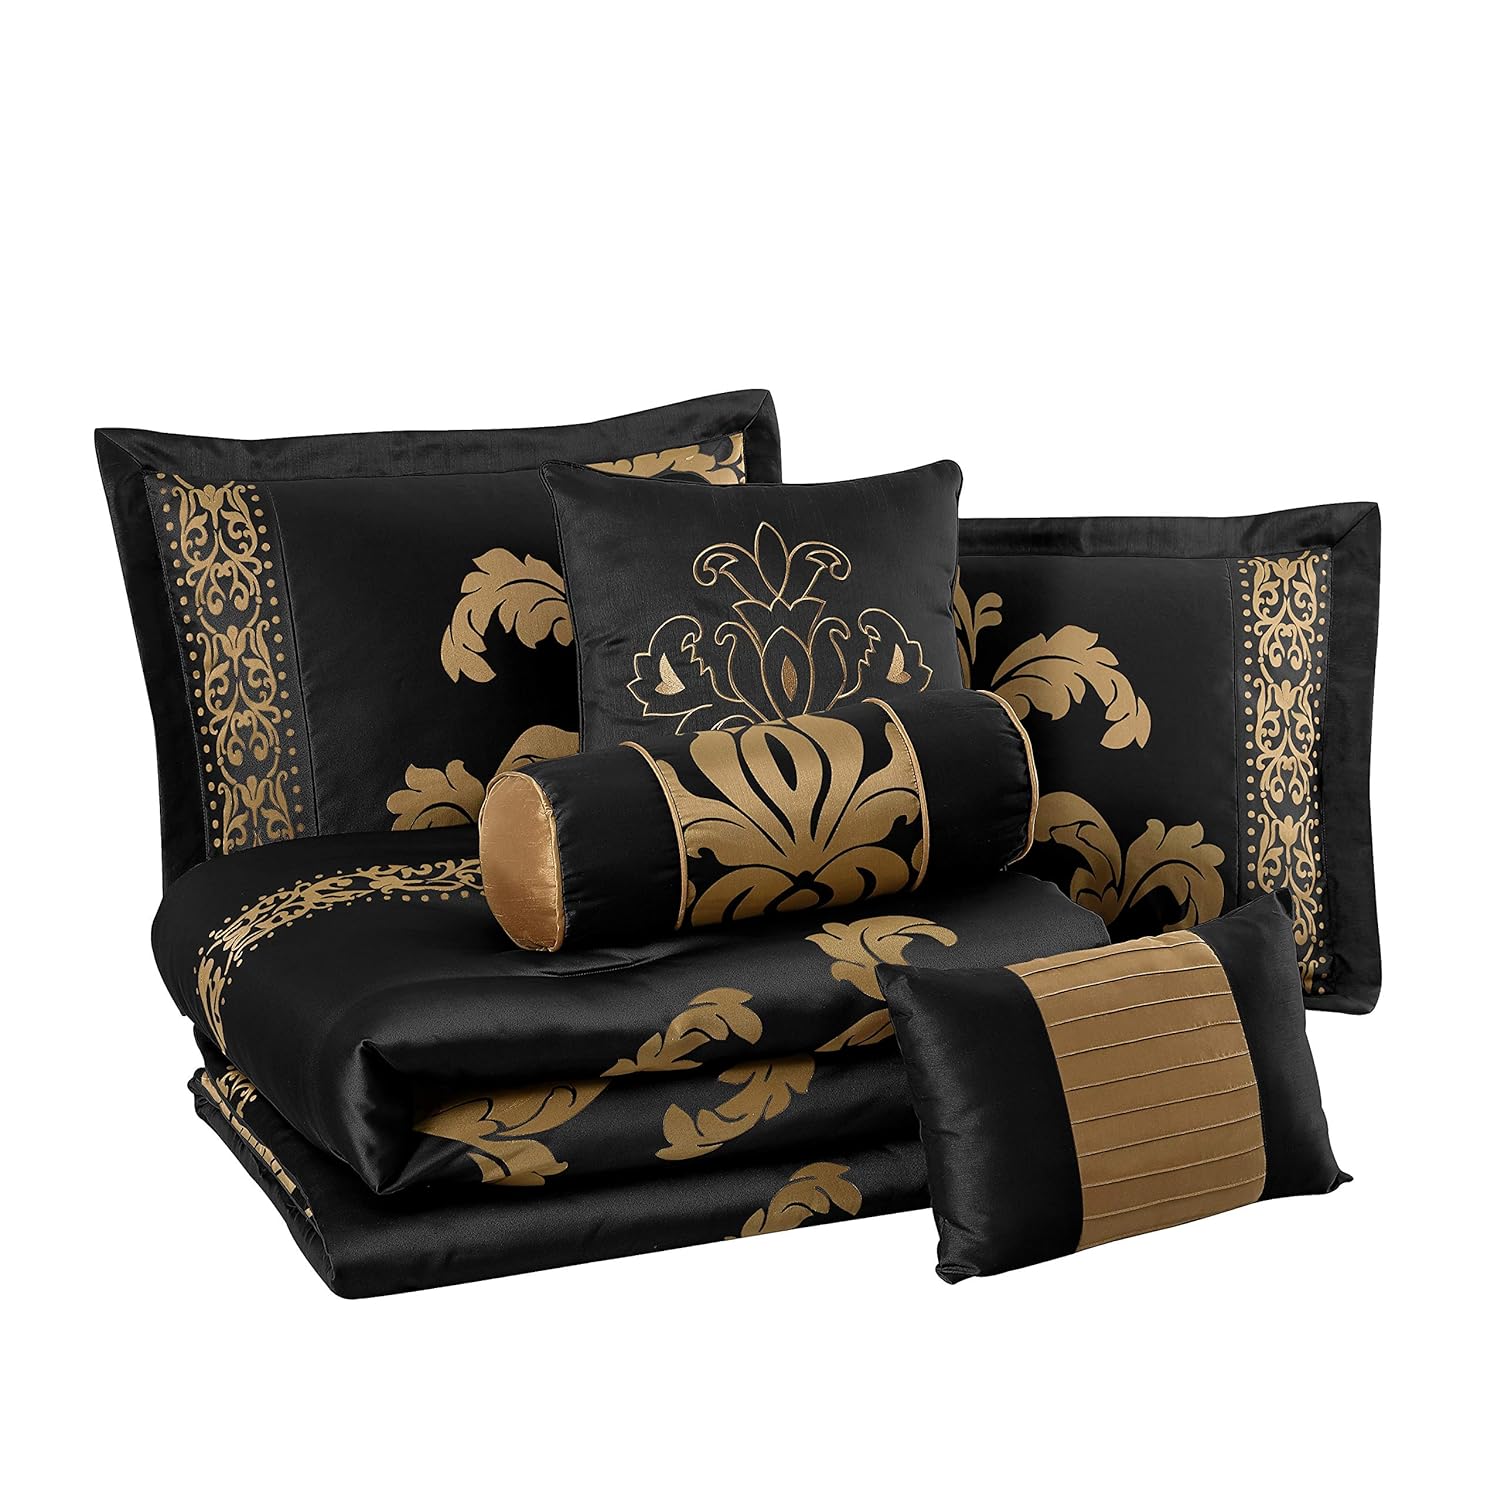 Chezmoi Collection Royale 7-Piece Jacquard Floral Comforter Set, Queen, Black/Gold